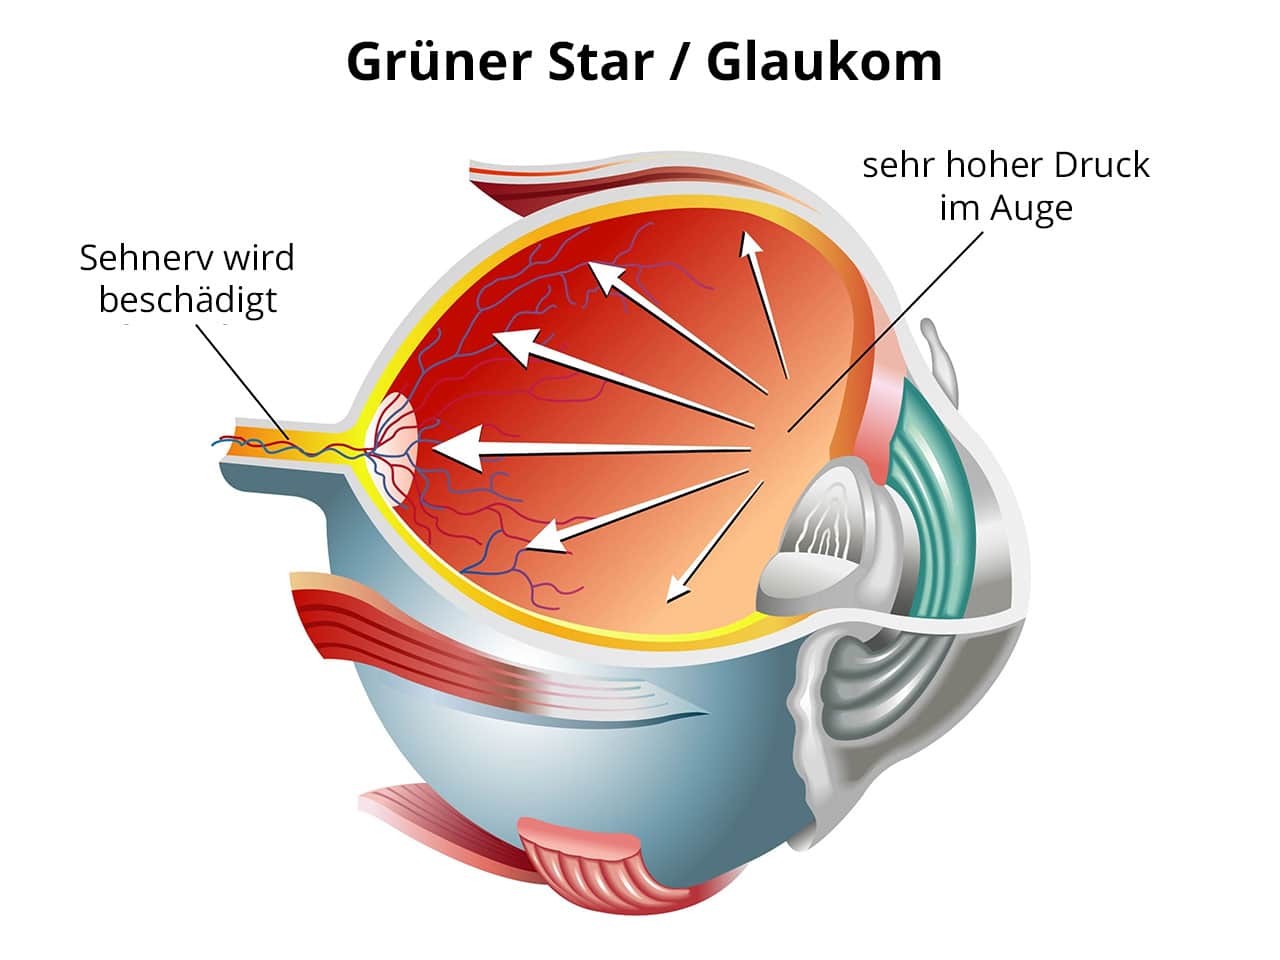 Grüner Star Glaukom